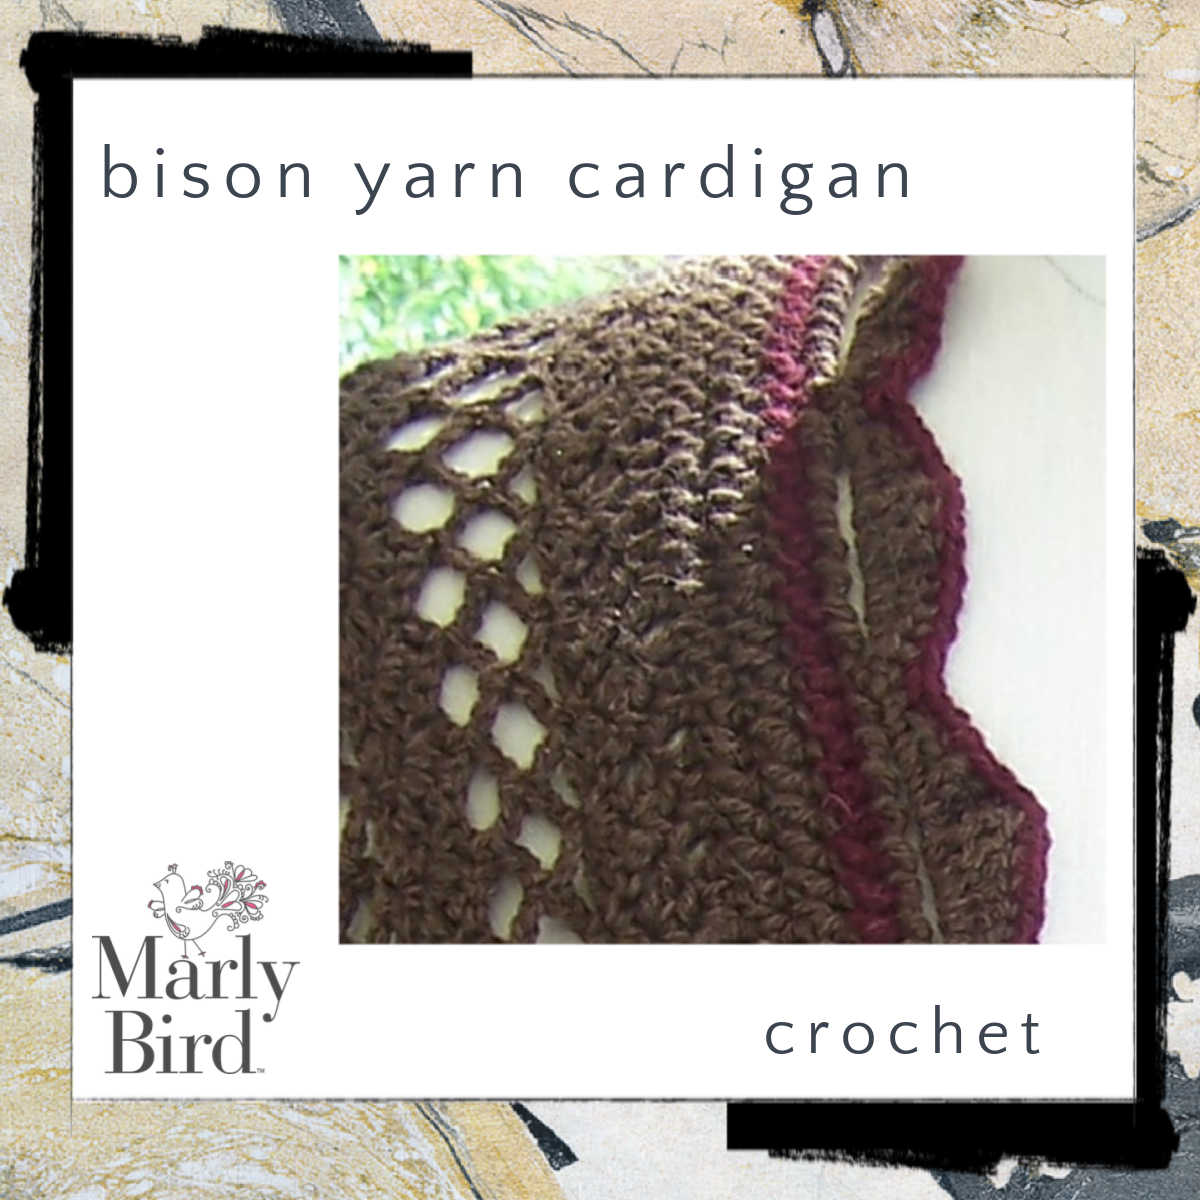 Scalloped crochet cardigan pattern - Marly Bird